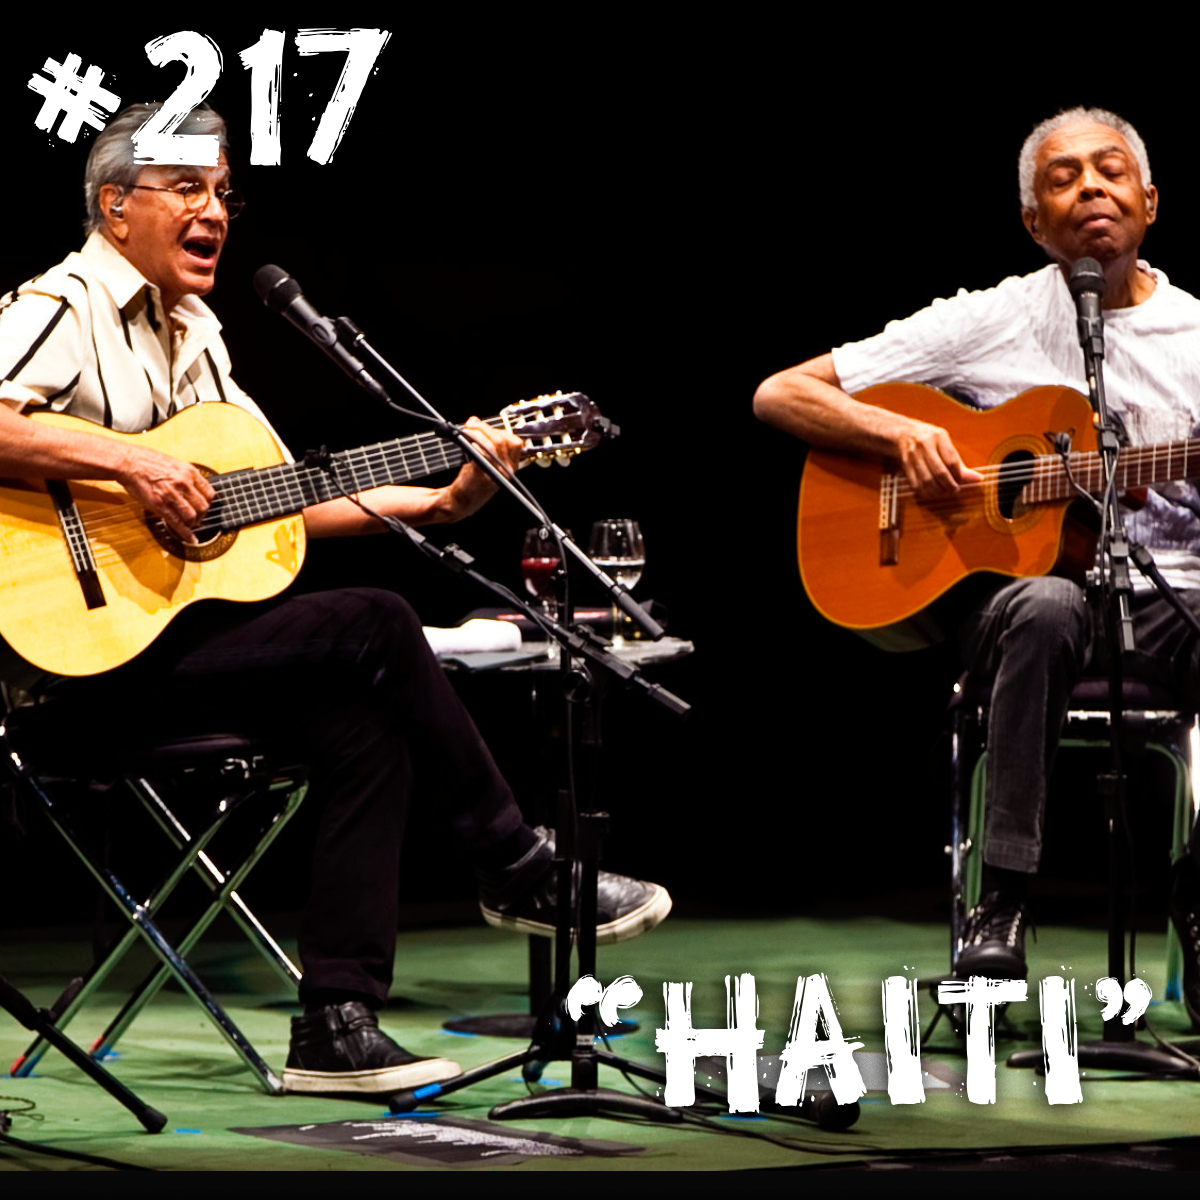 Farelos Musicais #217 – Haiti (Caetano Veloso & Gilberto Gil)